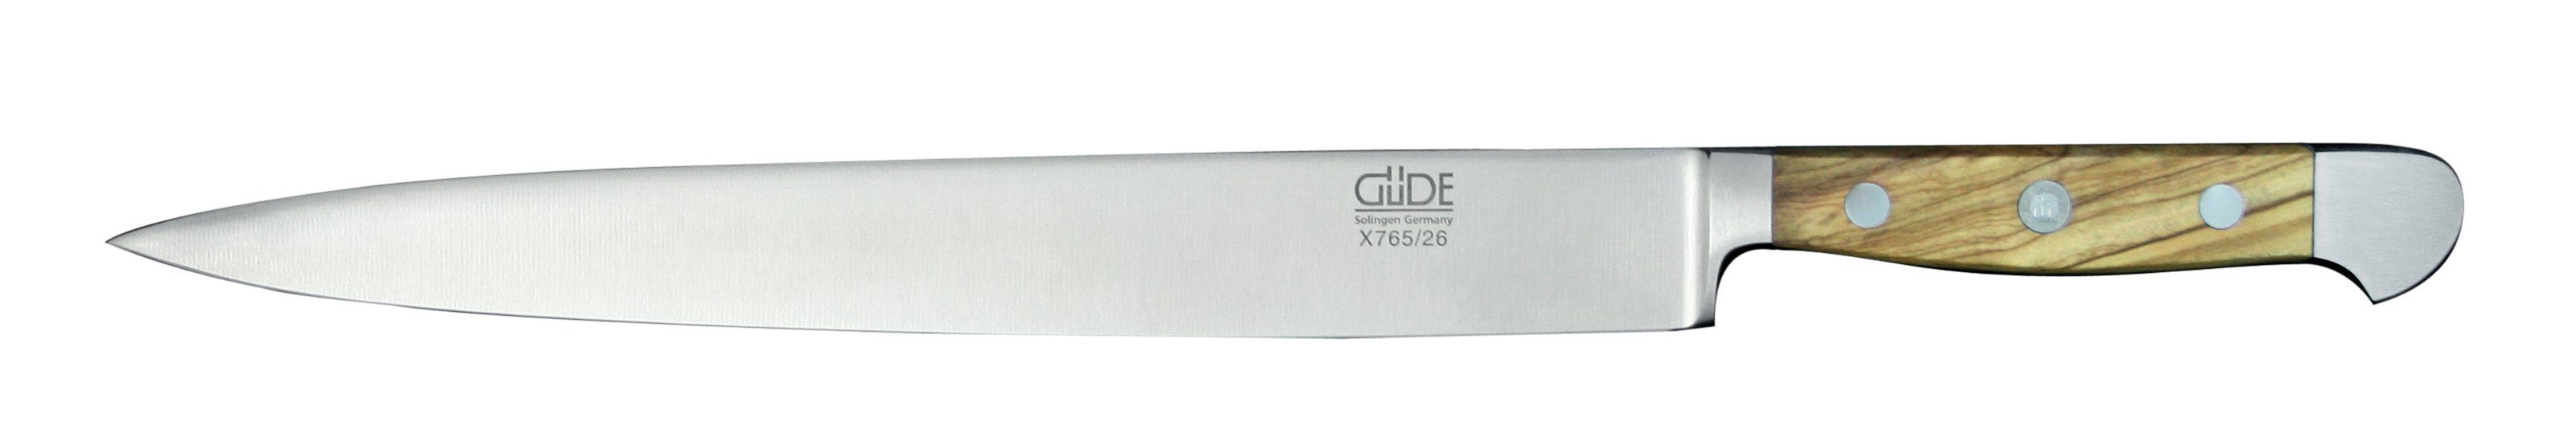 Güde Messer Solingen Schale Alpha Olive, Messerstahl, Schinkenmesser 26 cm - CVM-Messerstahl - Griffschalen Olivenholz